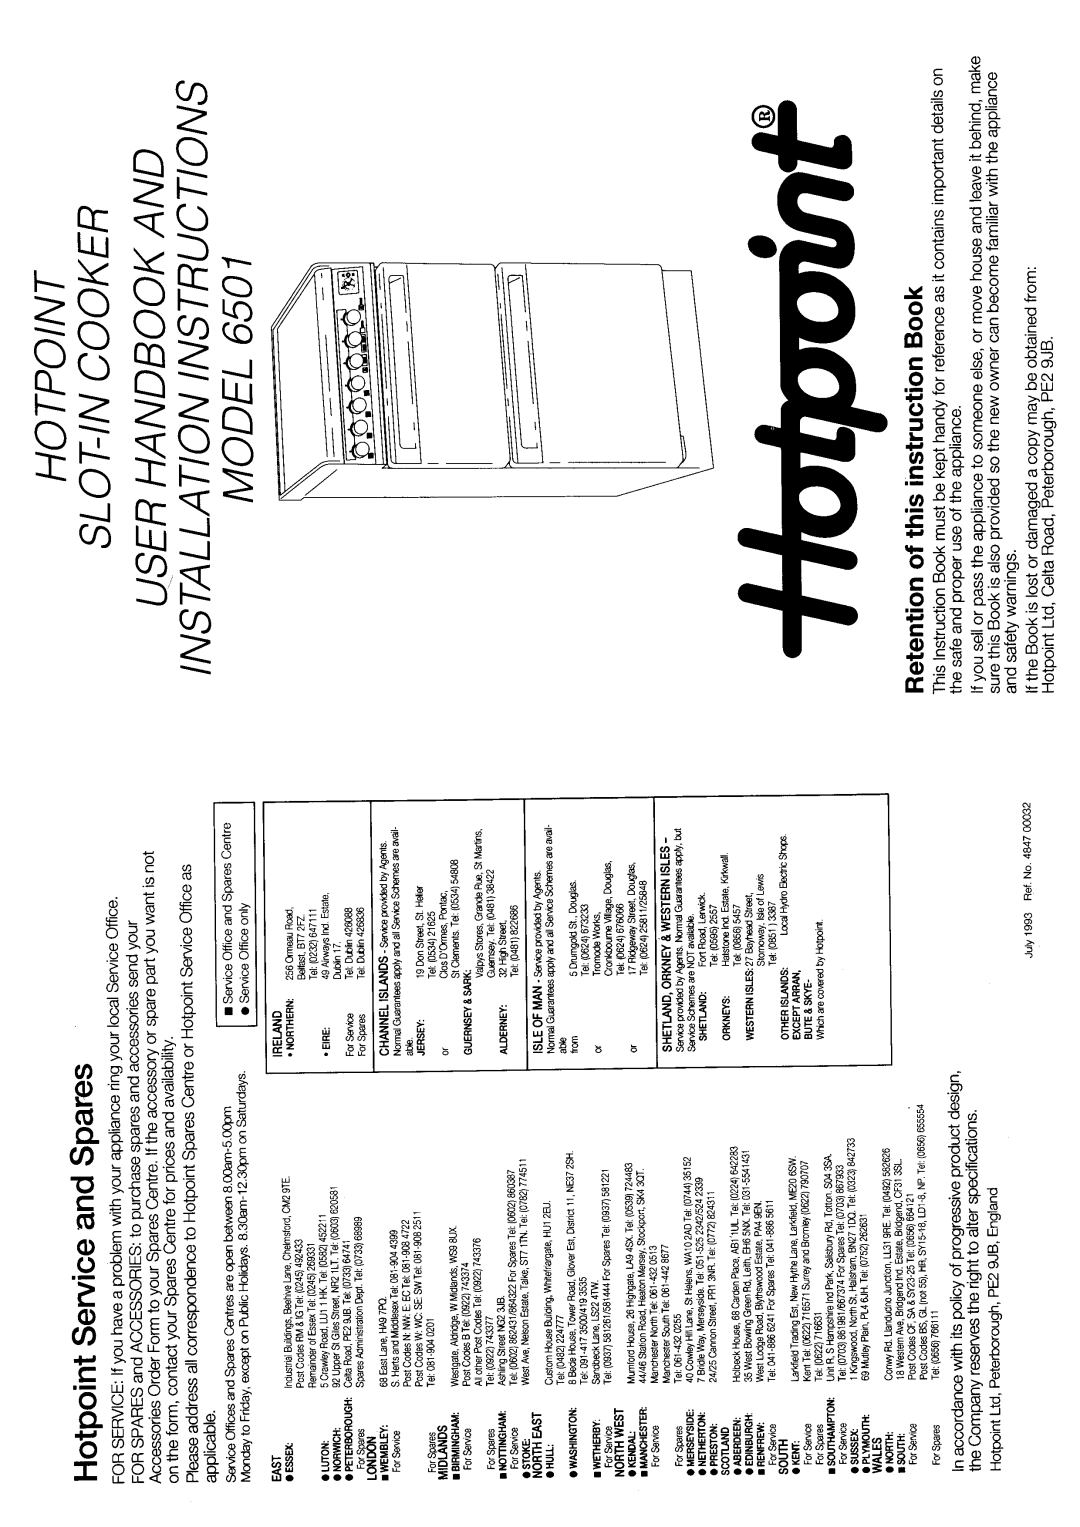 Hotpoint 6501 manual 